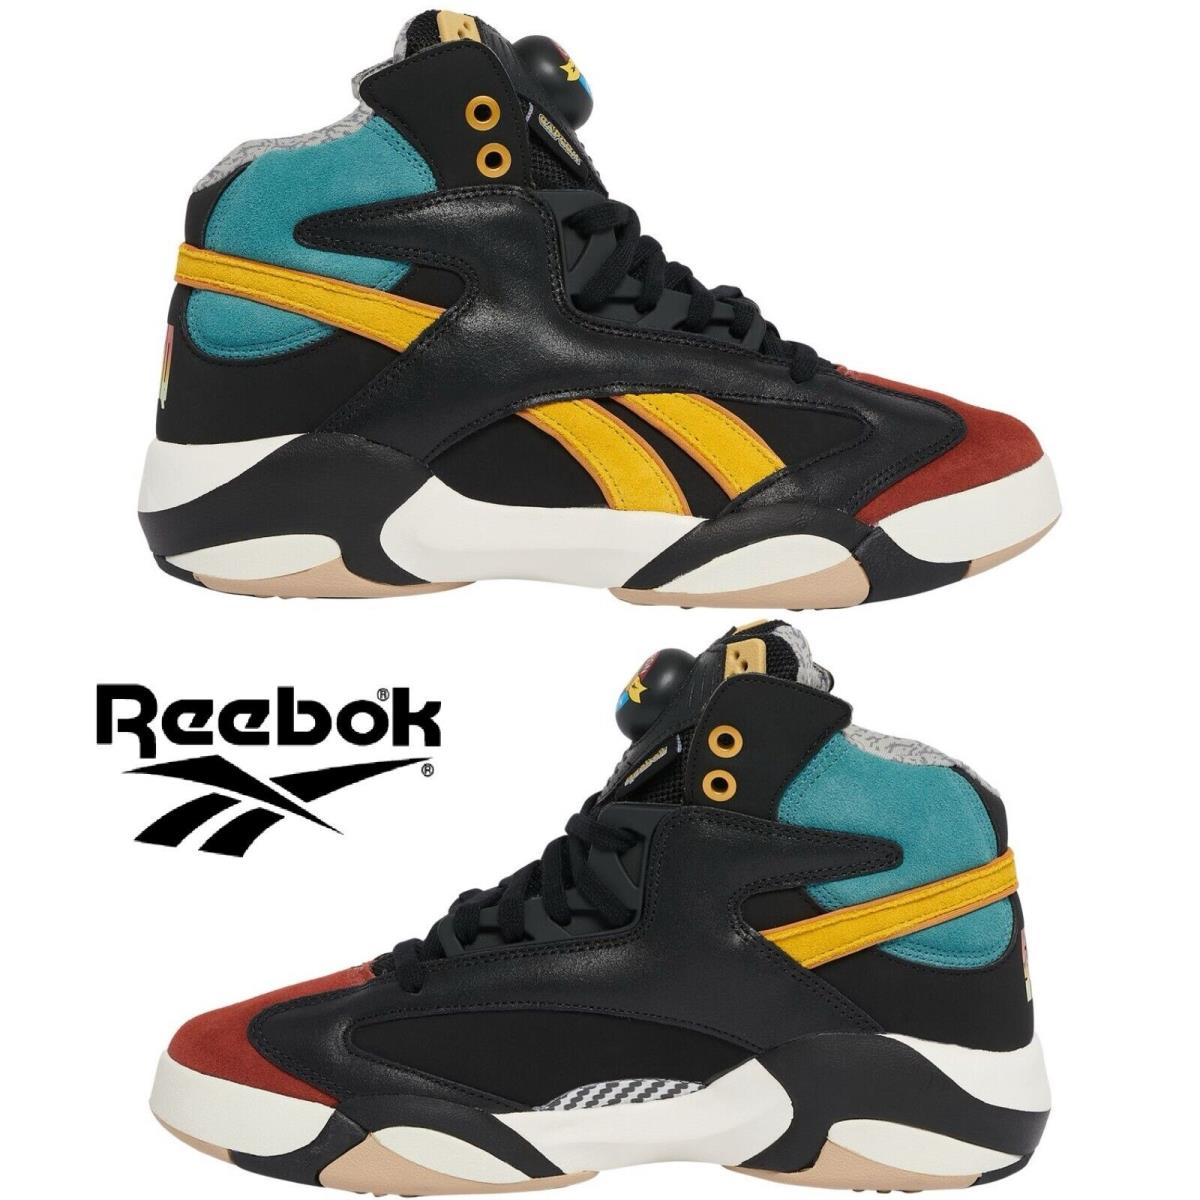 Reebok Shaq Attaq Basketball Shoes Men`s Sneakers Running Casual Sport Black